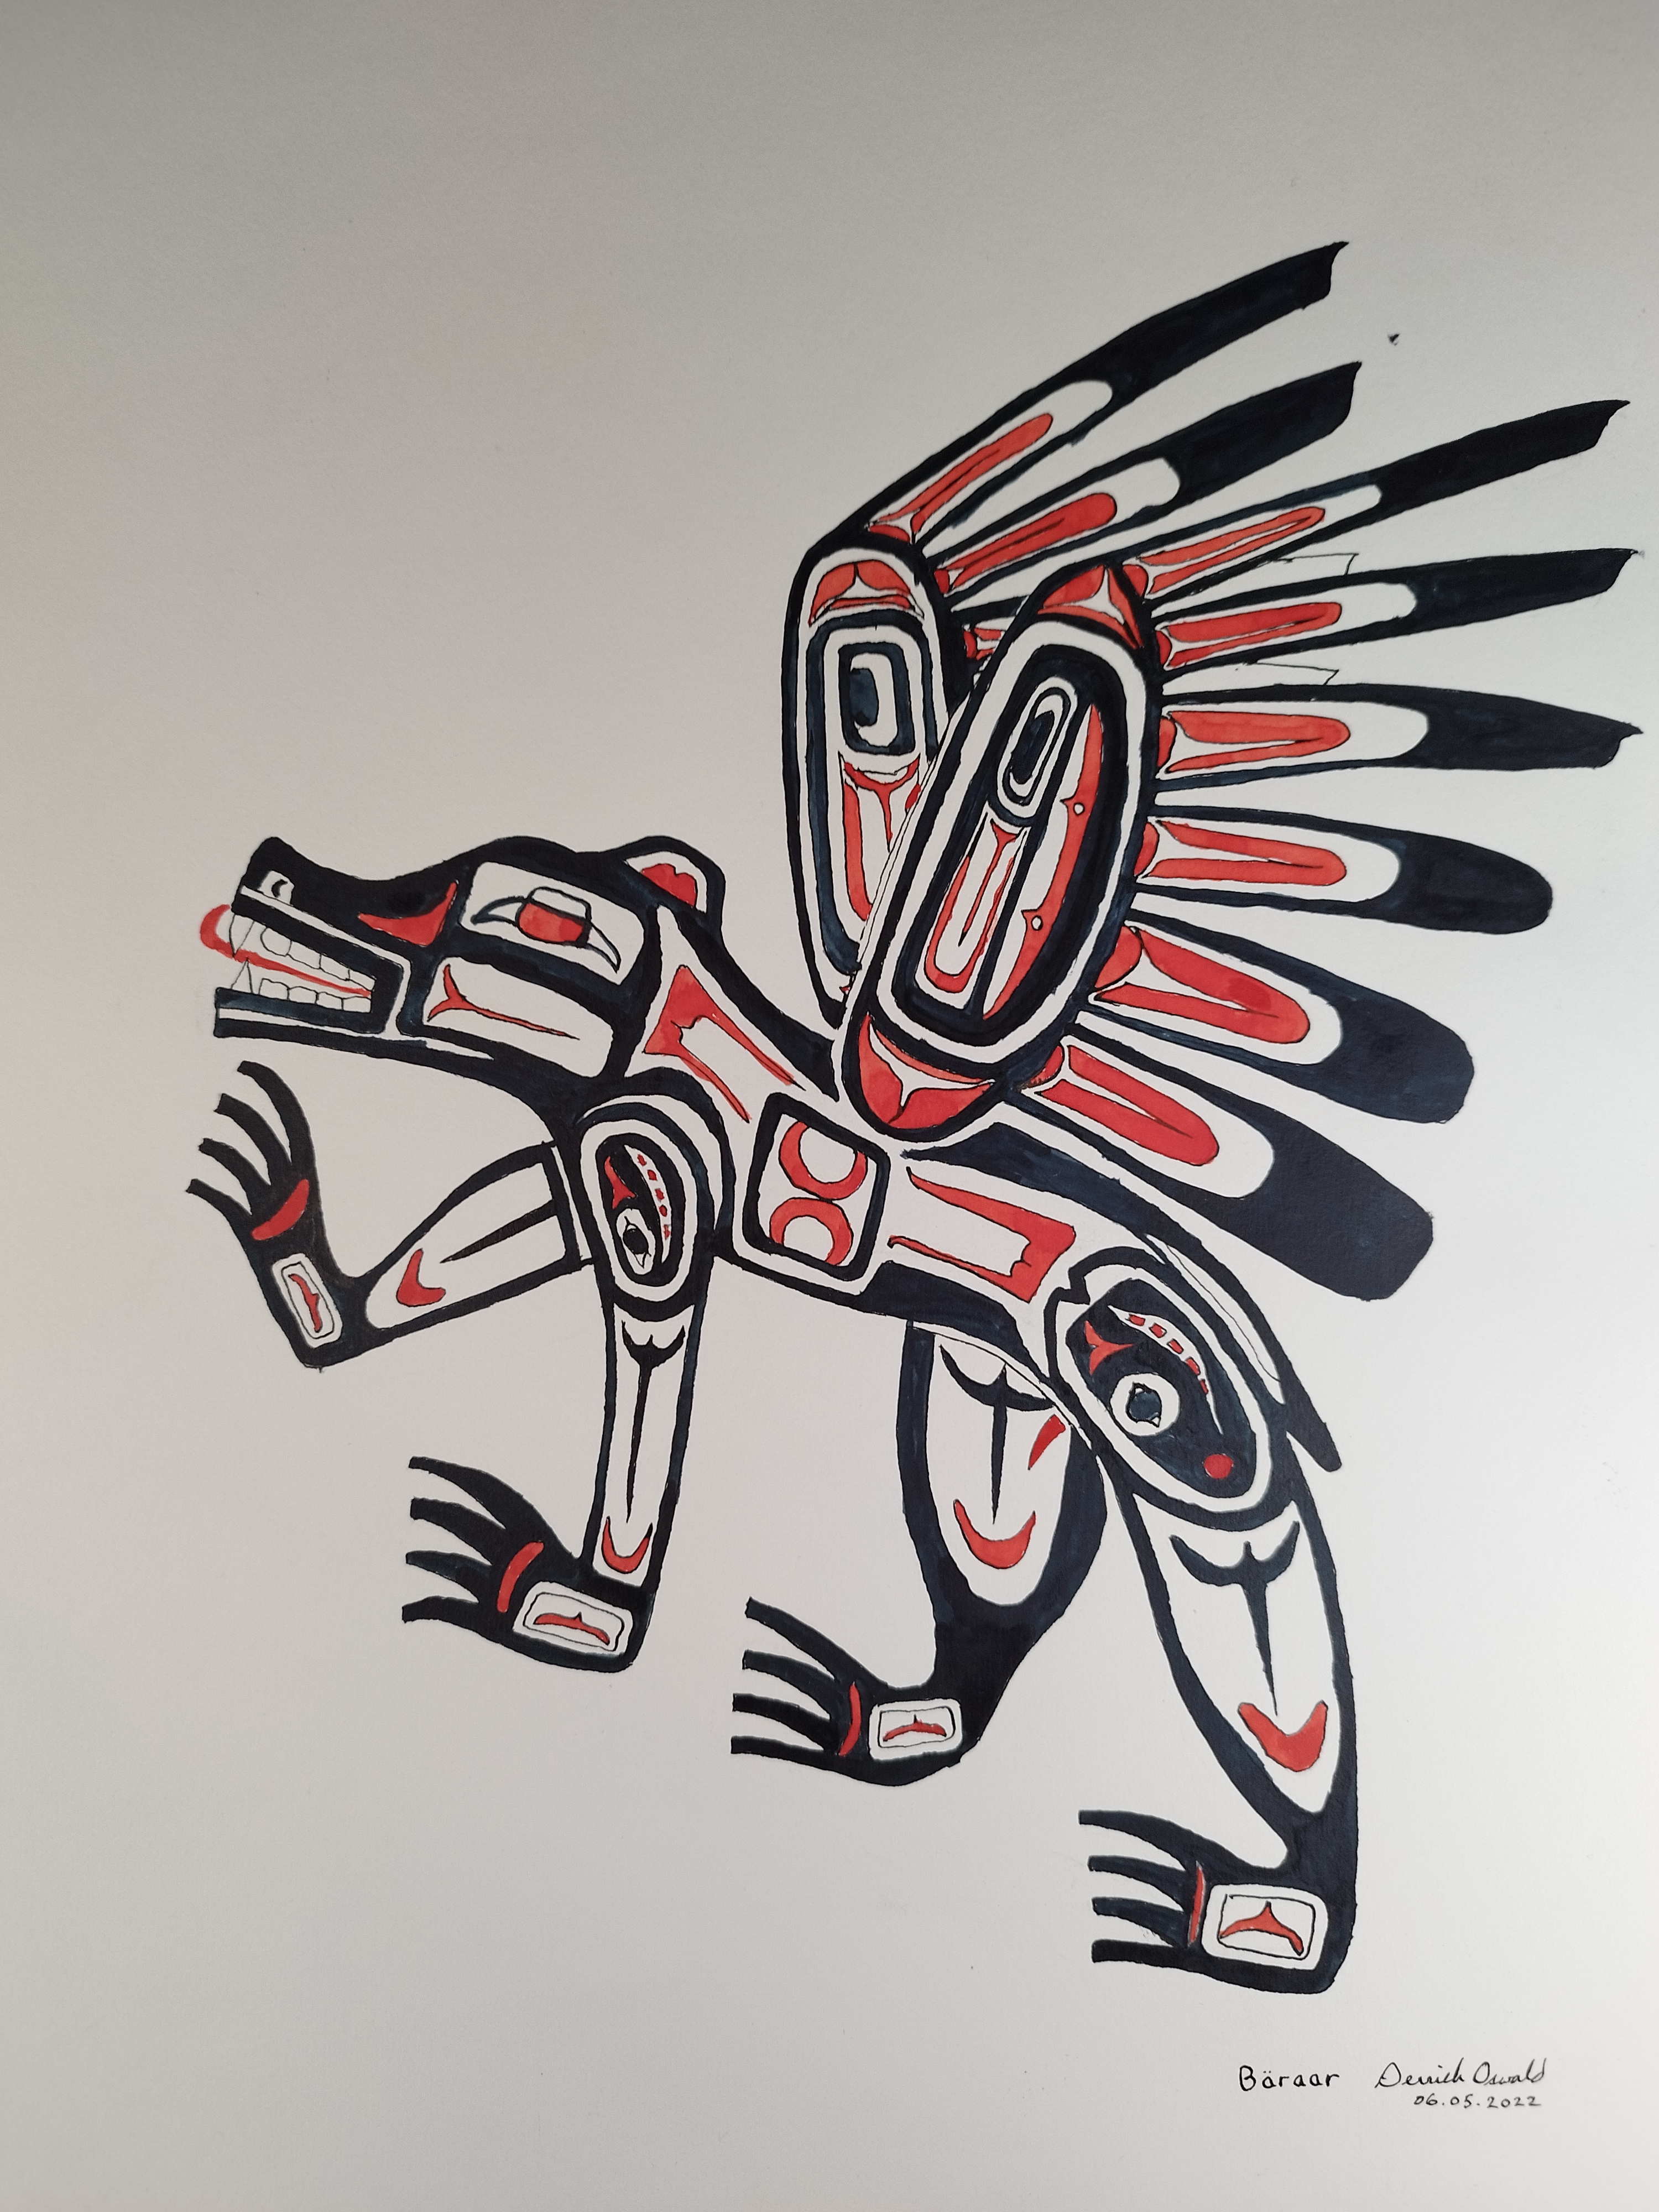 watercolor of a bear-eagle in Haida motif